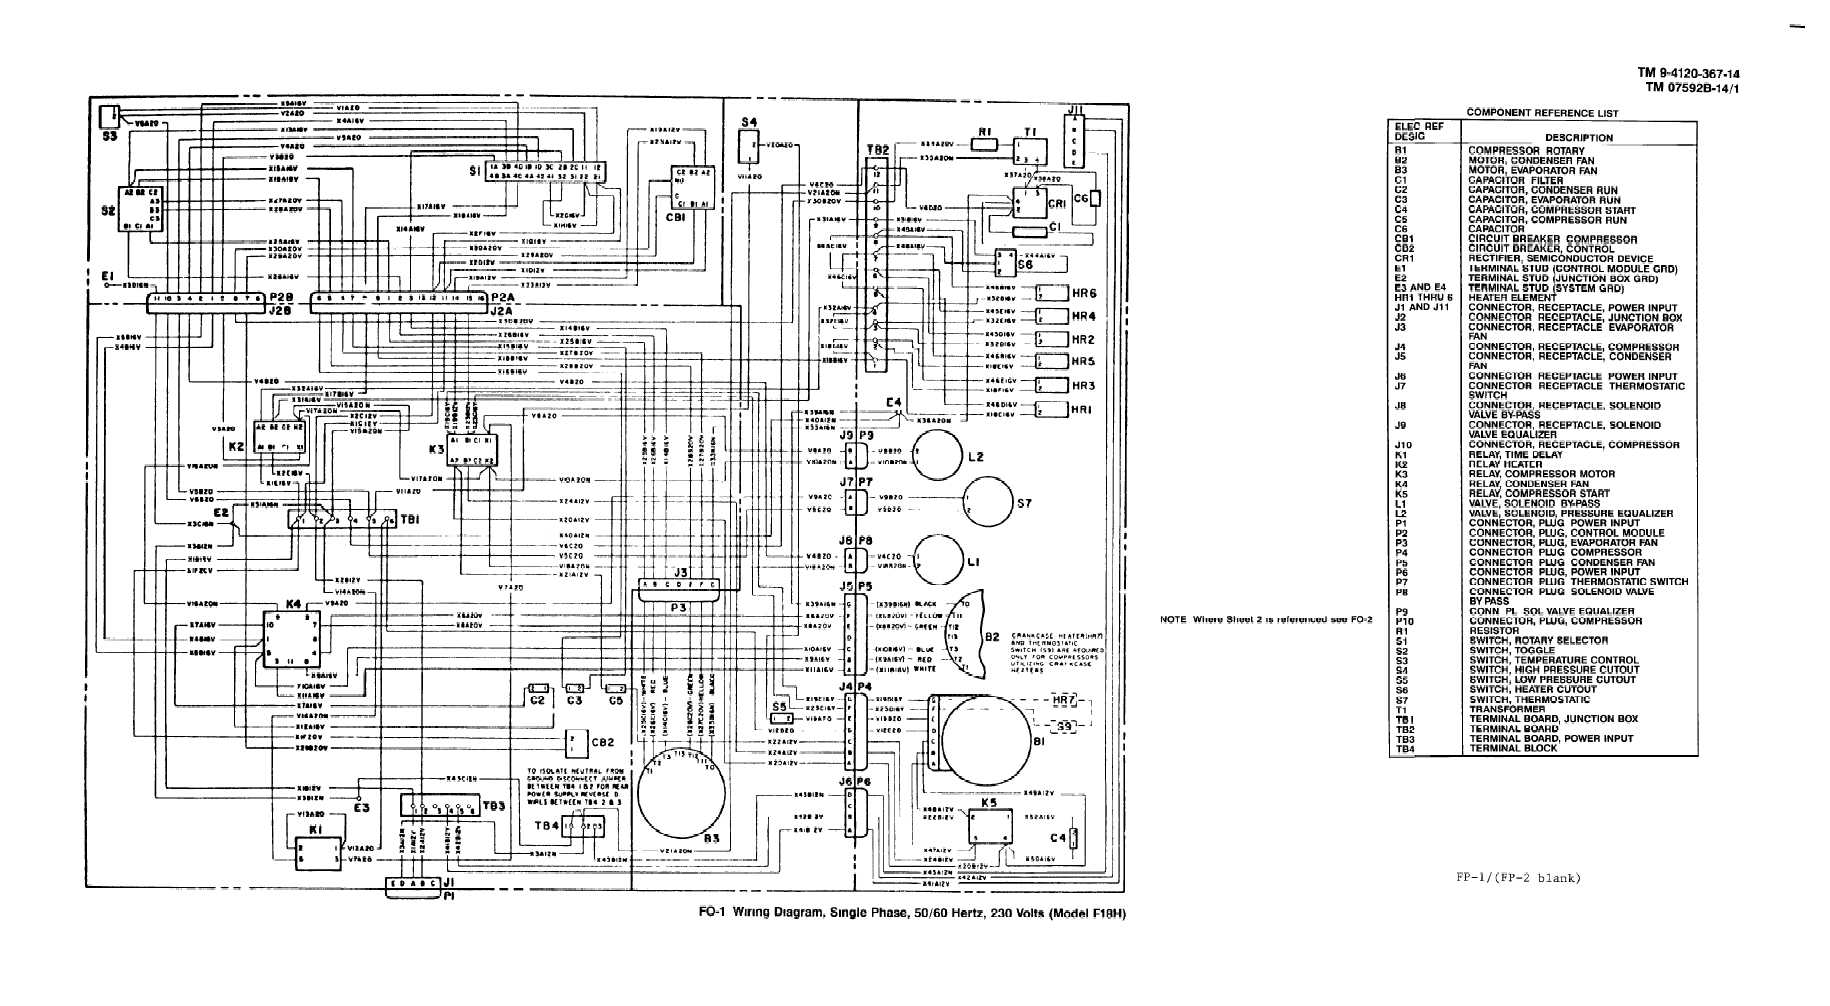 Single Phase 240 Volt Residential Wiring Diagram - Complete Wiring Schemas